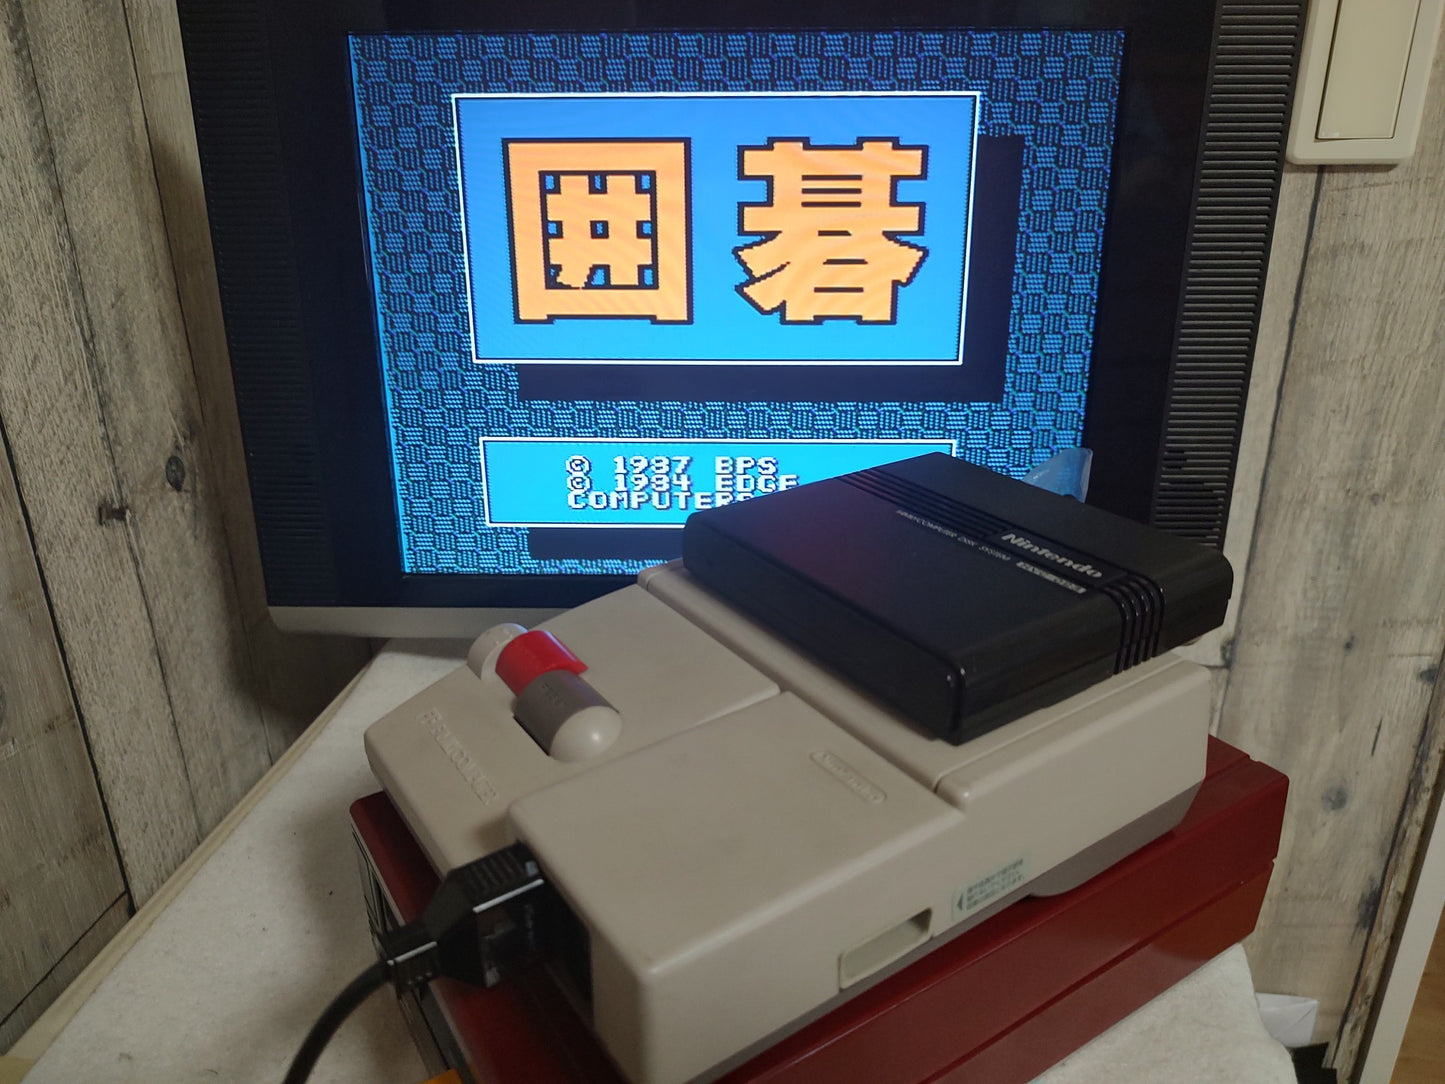 IGO KYUROBAN TAIKYOKU (NES) Disk System, Game disk and box set-f0804-